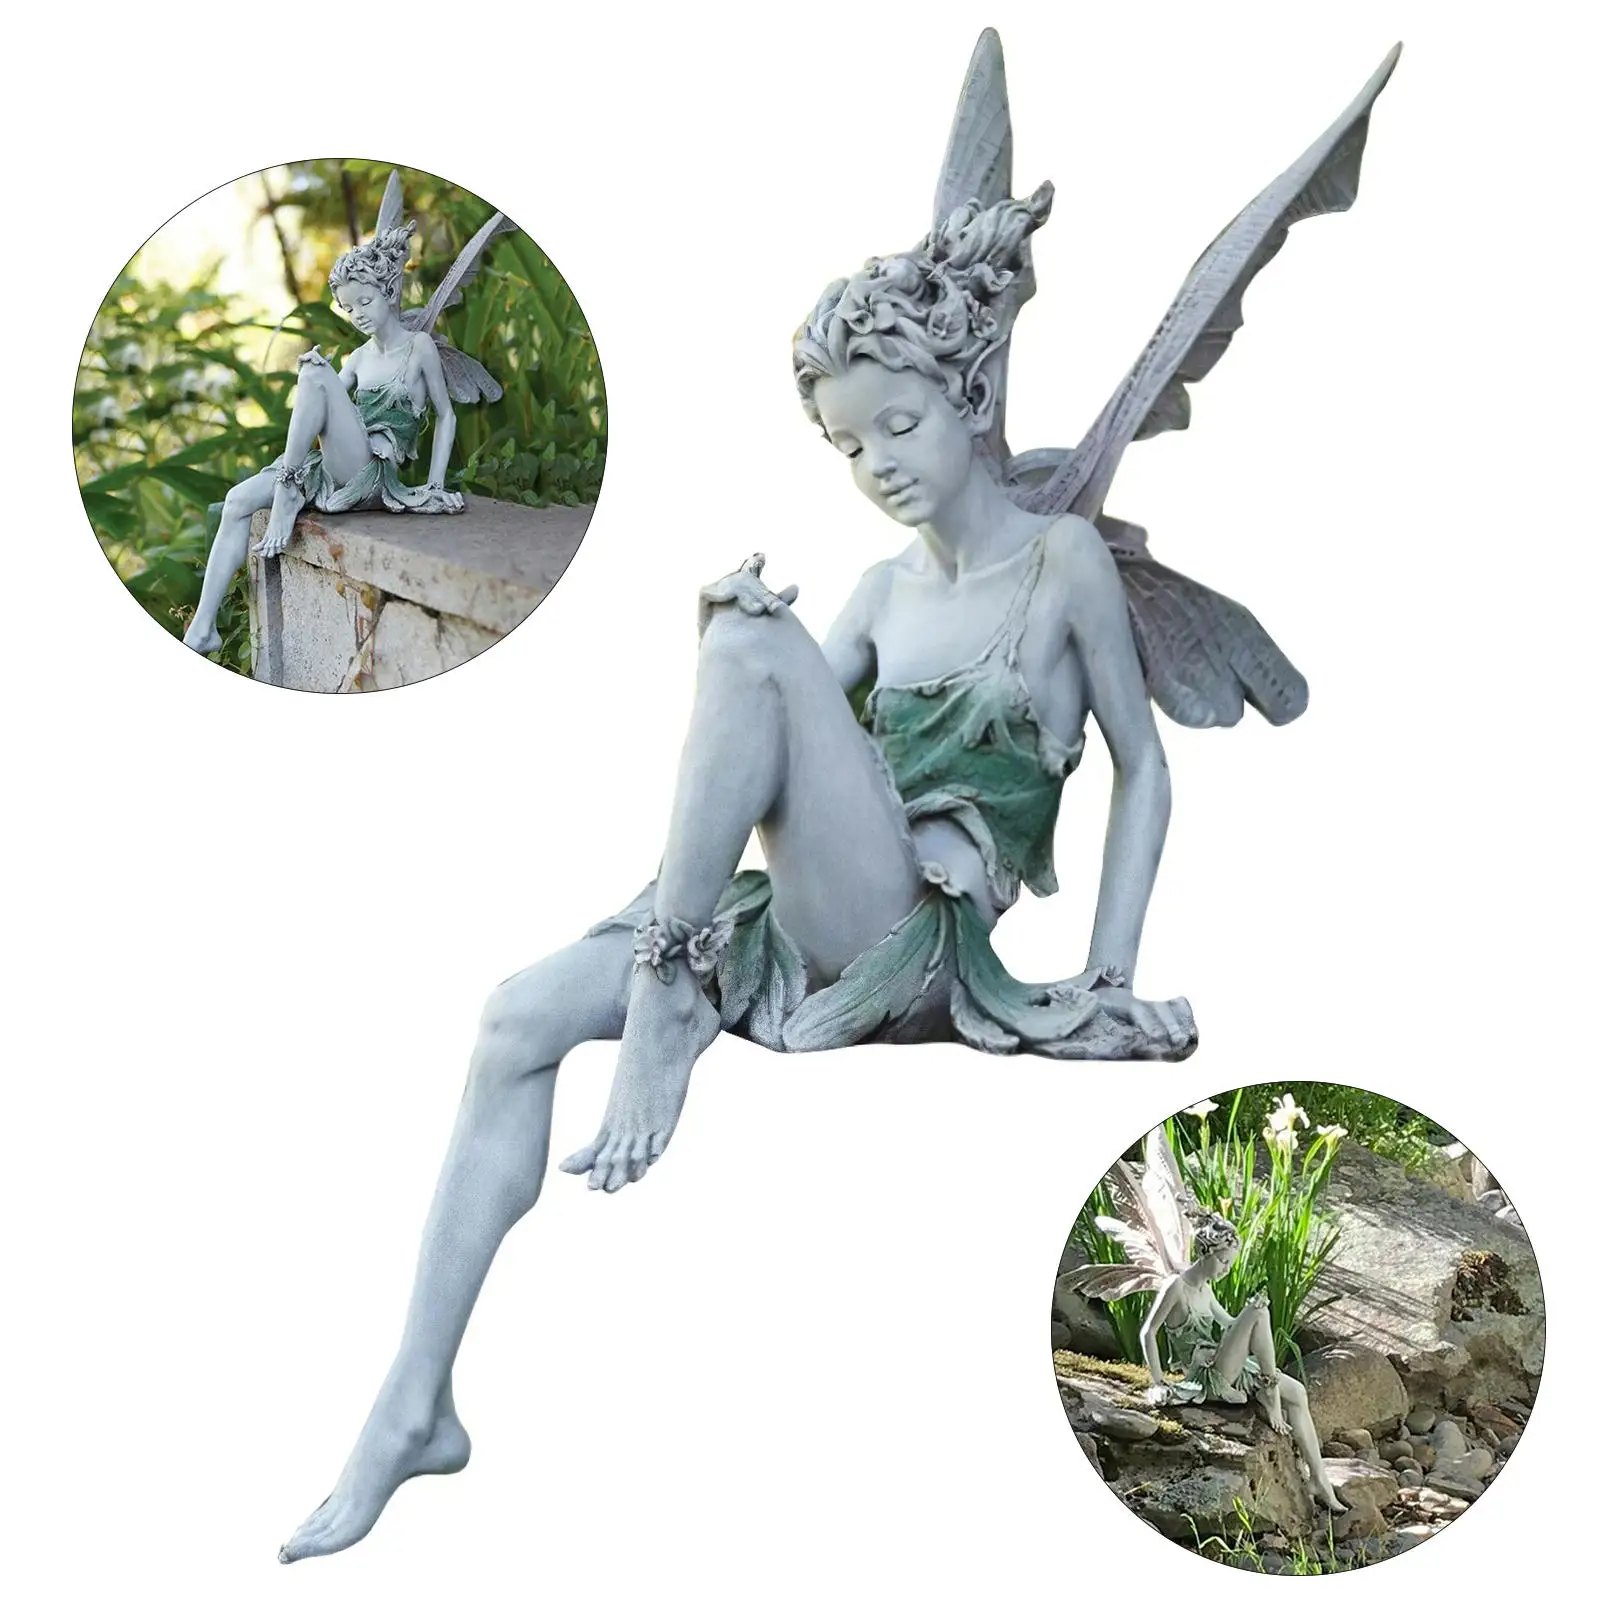 Garden Fairy Statue 18x8x15cm Yard Ledge Decorative Figurine Home Shelf Lawn Patio Backyard Angel Weatherproof Sculpture Craft